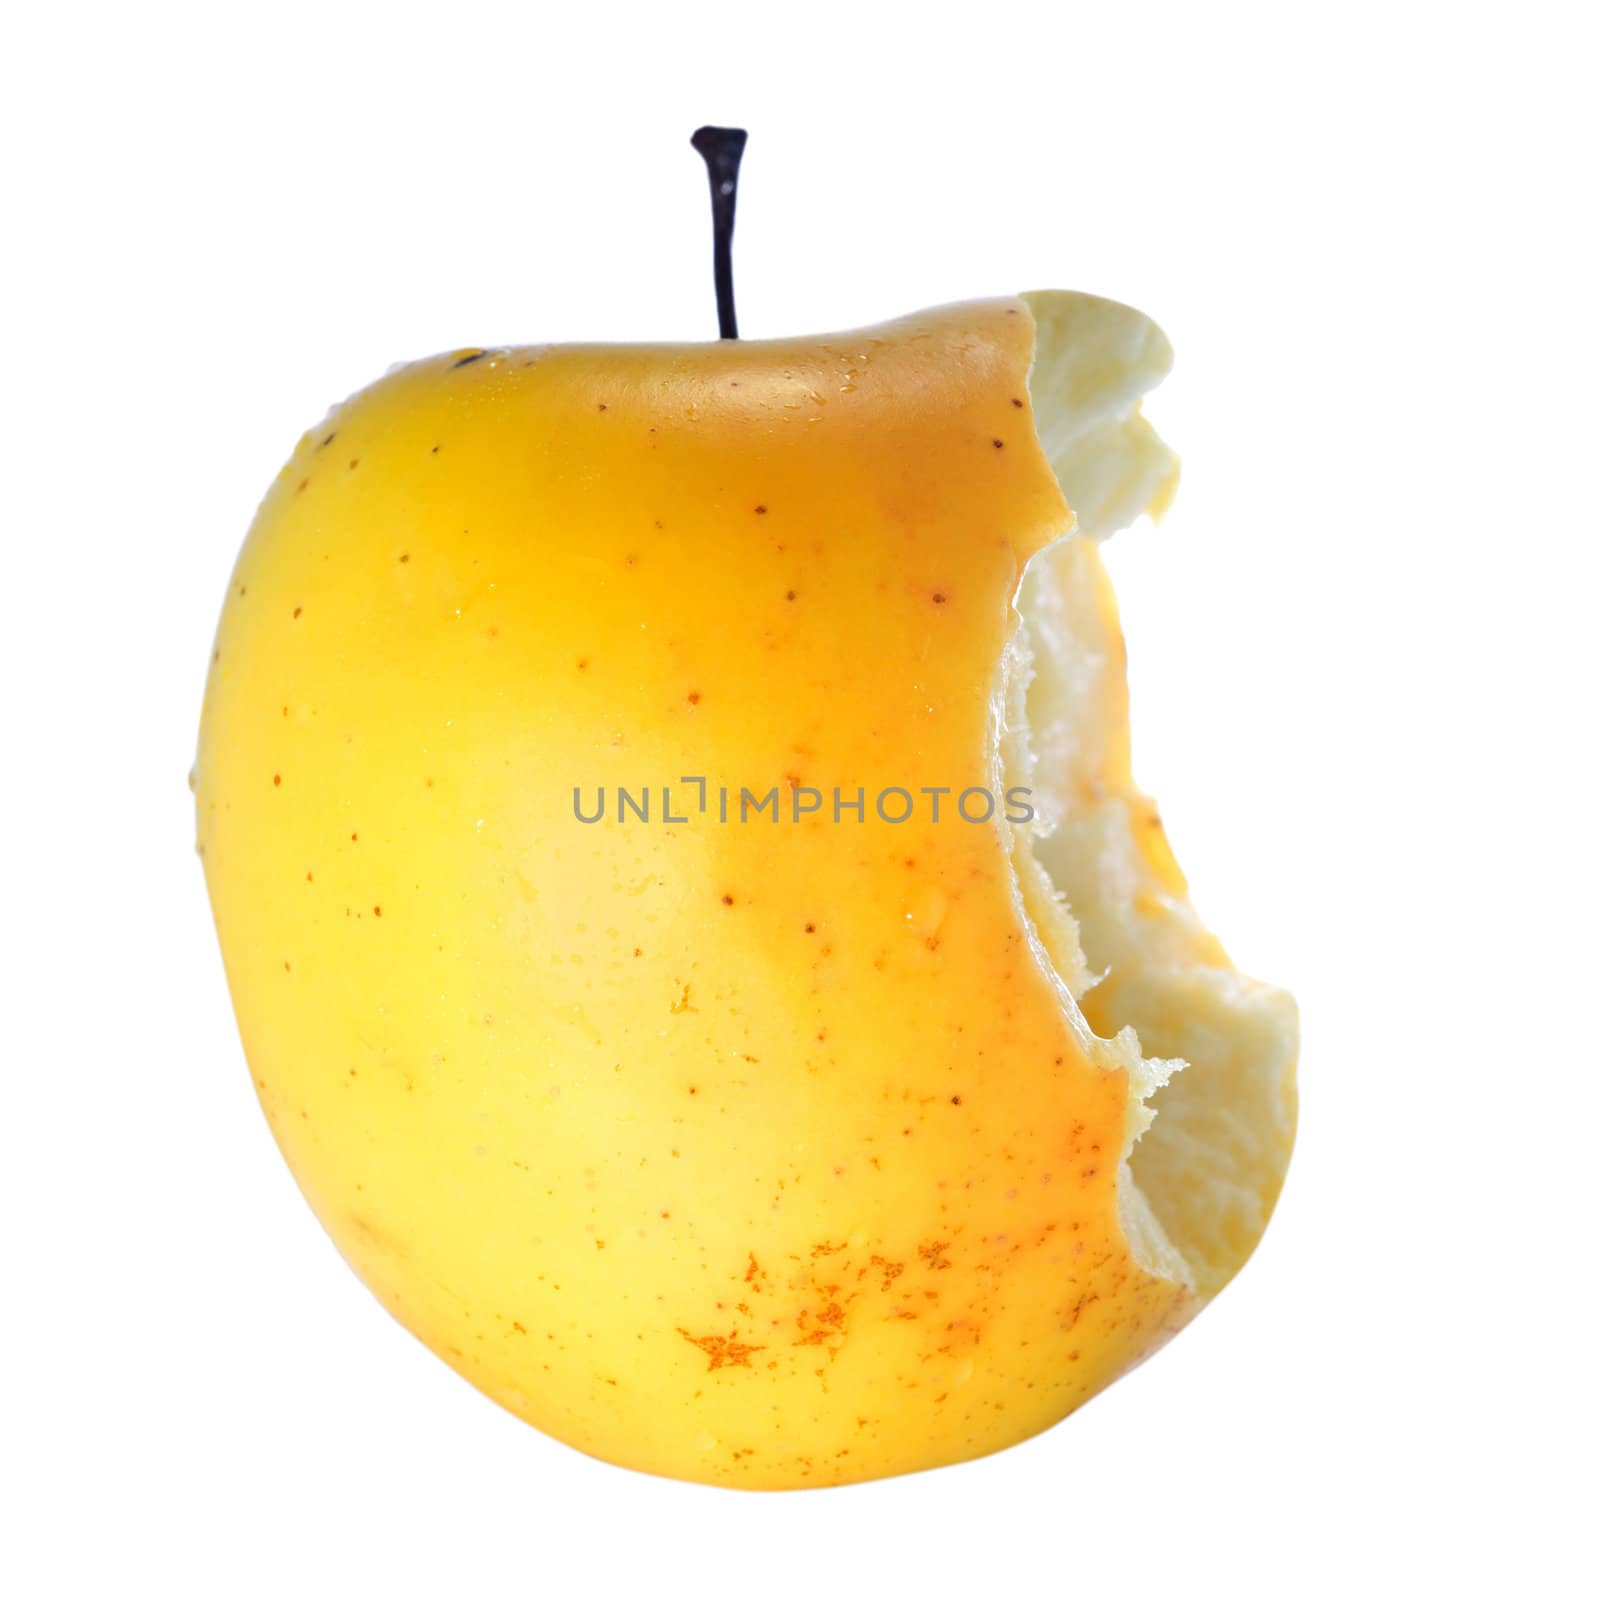 Stock photo: an image of a big yellow apple half eaten